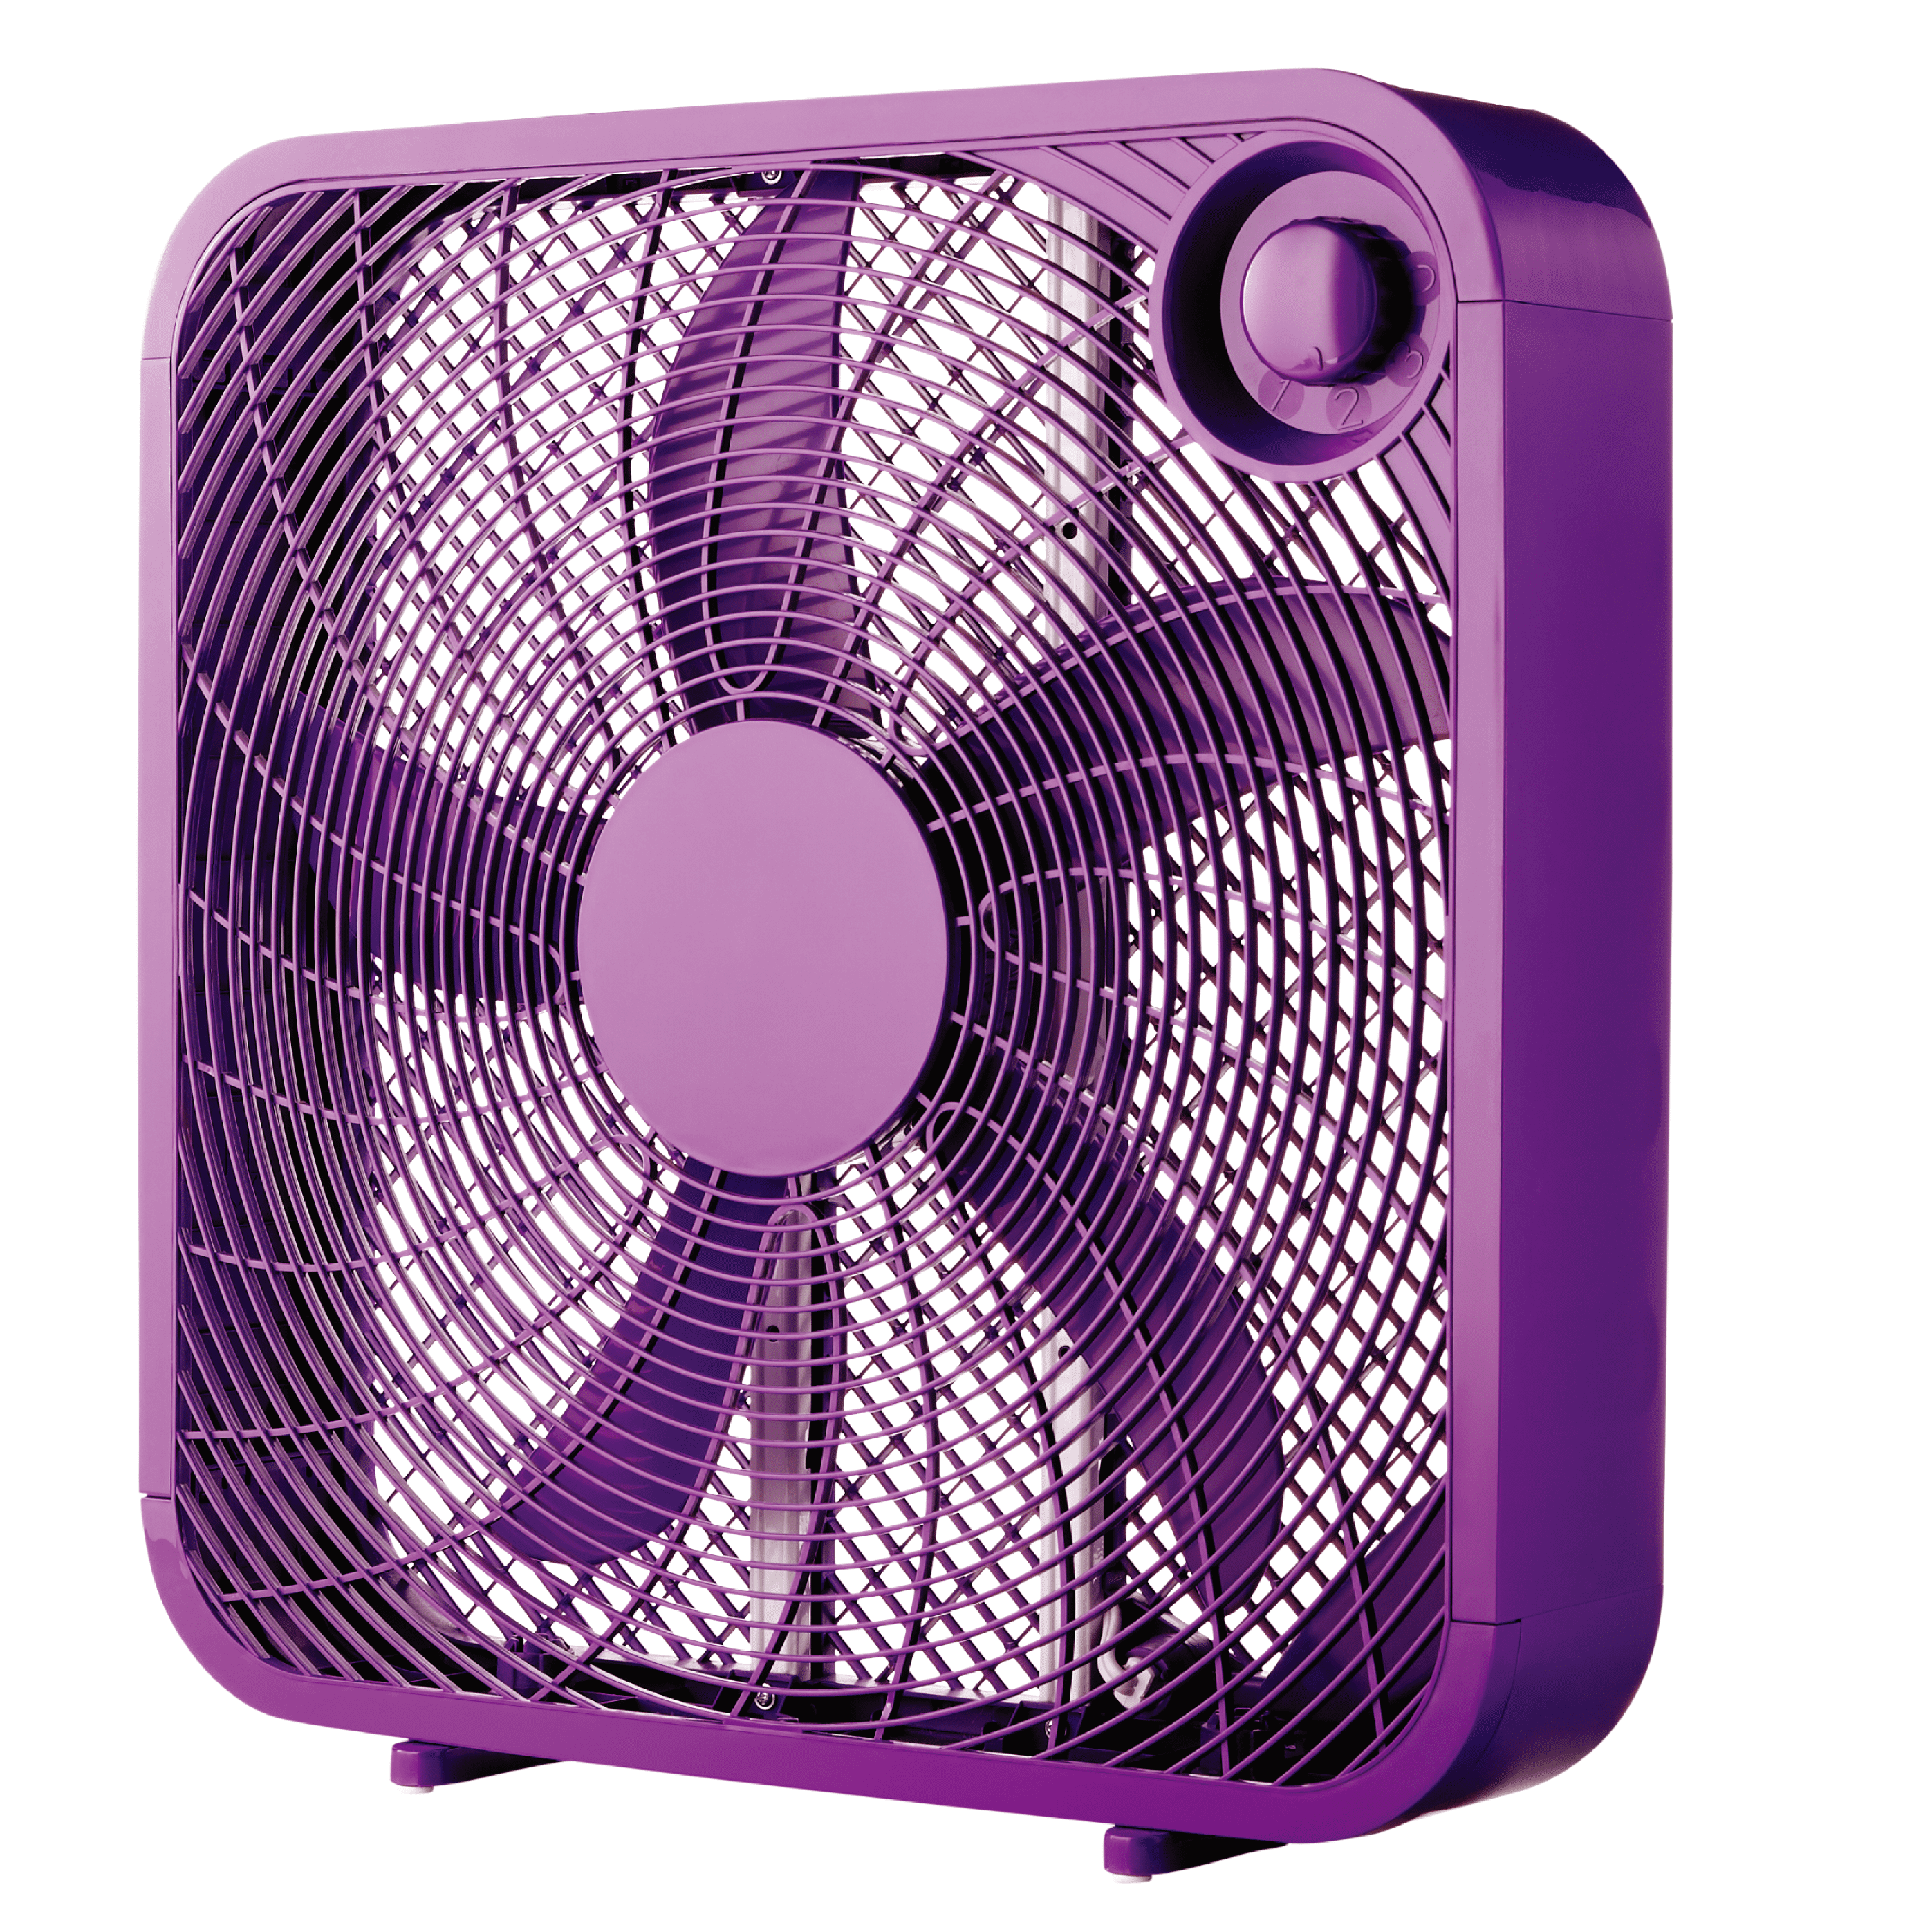 Color кулер. Вентилятор Osca Fan Box. Фиолетовый вентилятор. Бокс для вентилятора. Кулер сиреневый.